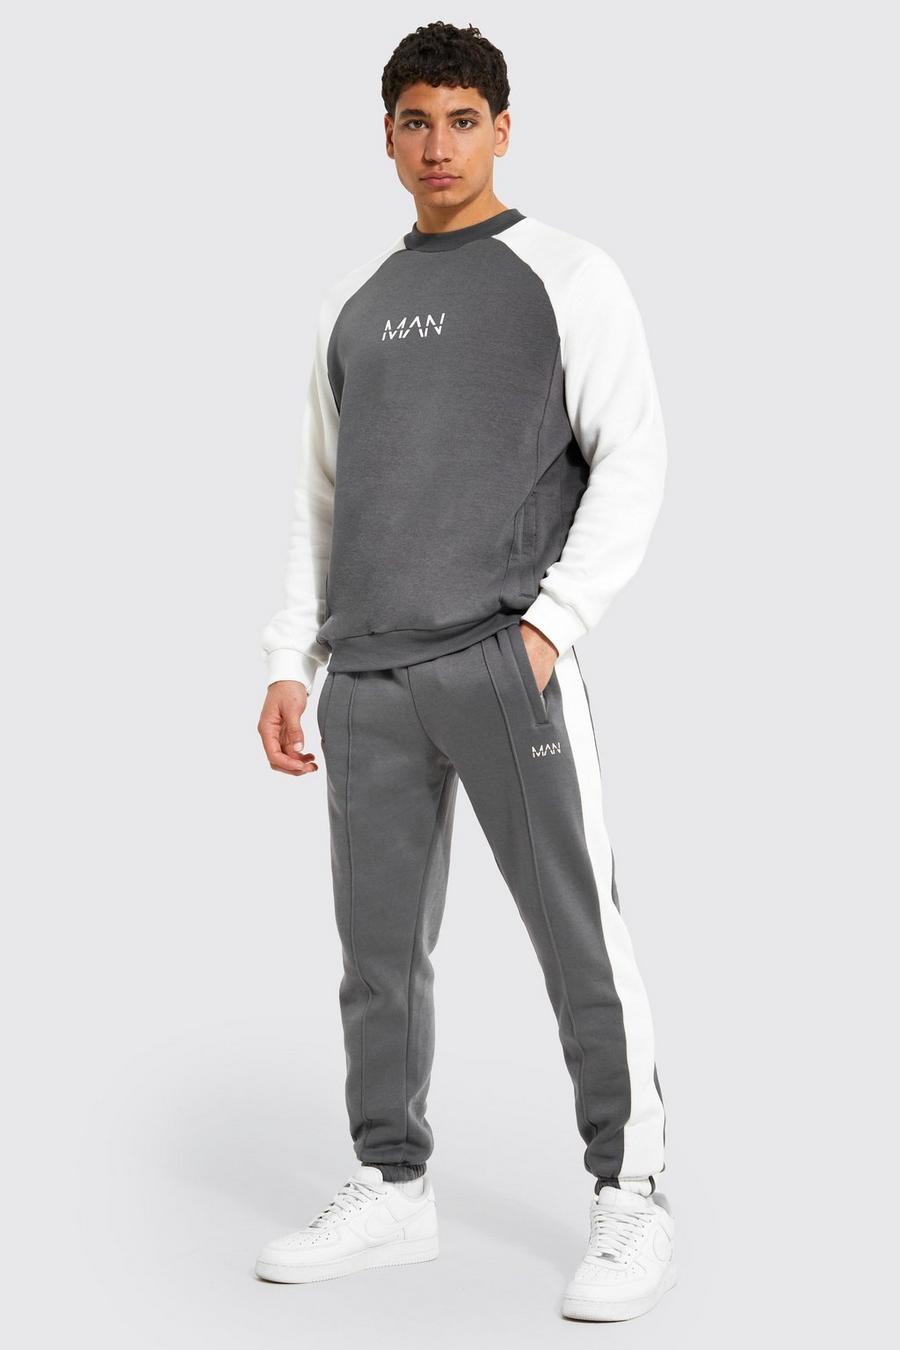 Man Colorblock Sweatshirt-Trainingsanzug, Charcoal gris